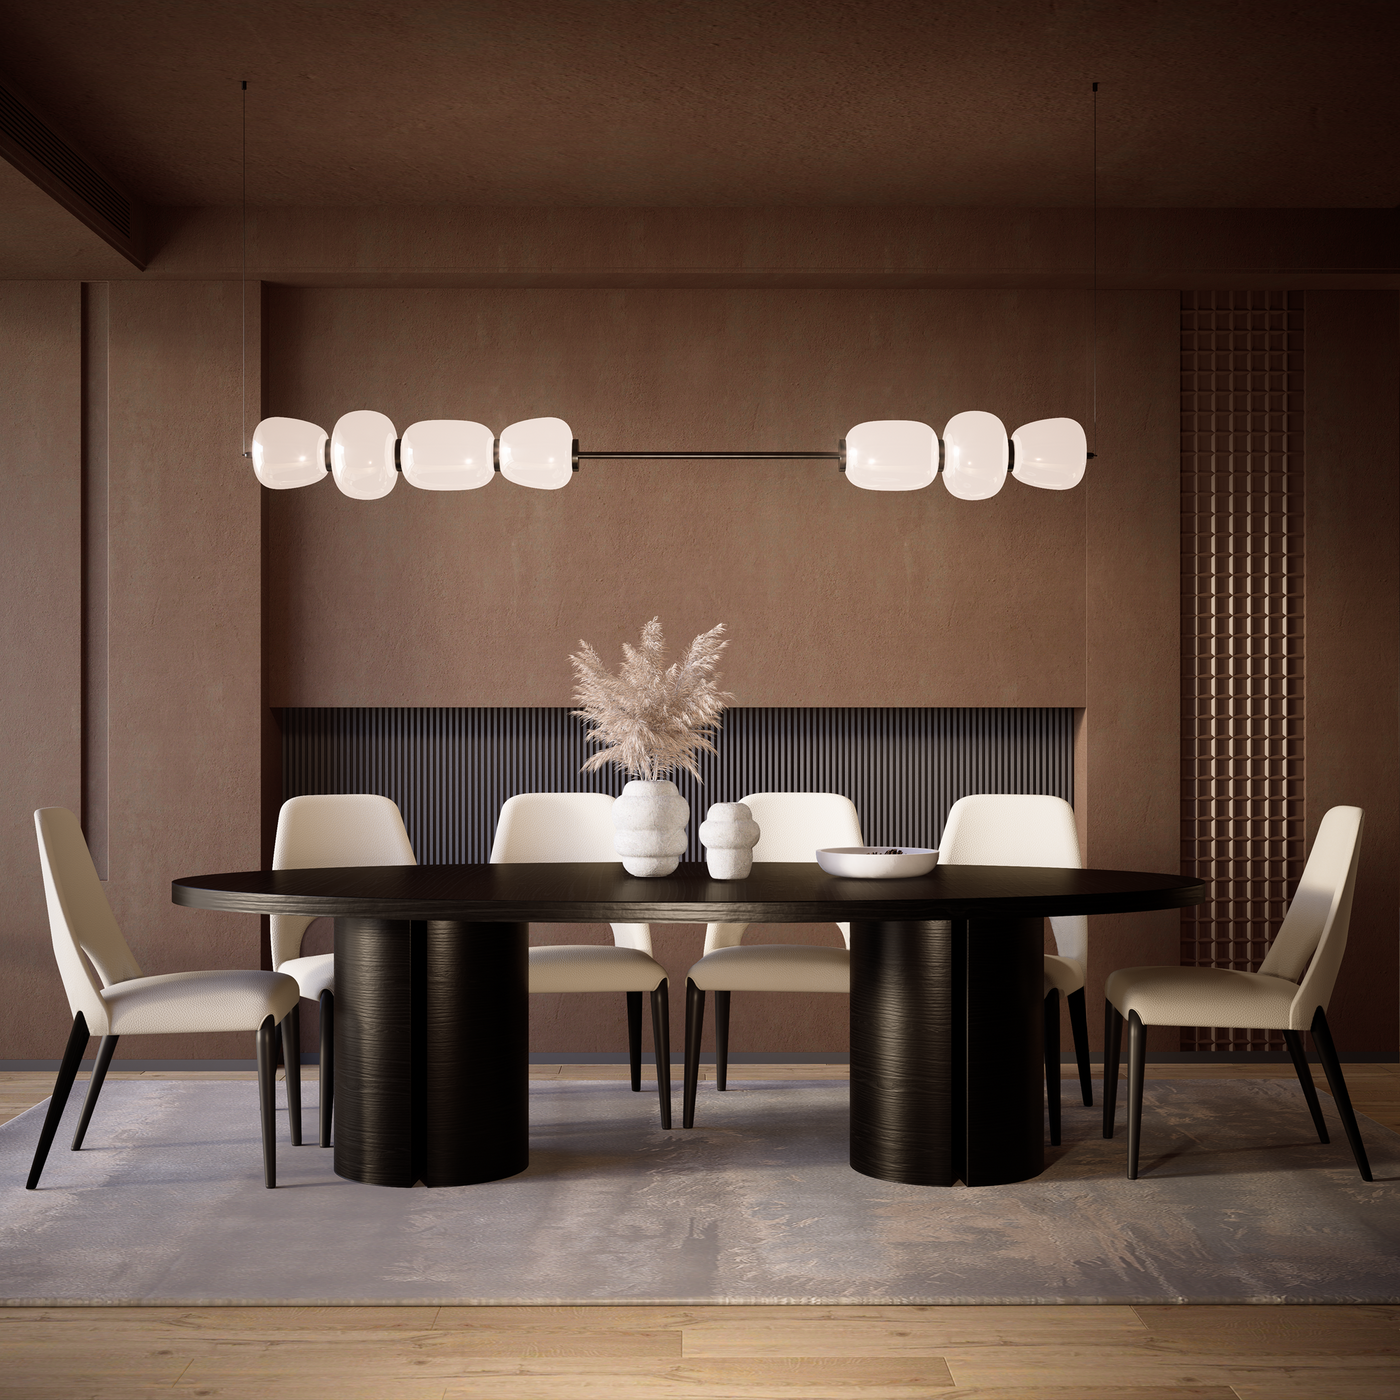 Luigi Oval Dining Table Black - 2.7m - Future Classics Furniture